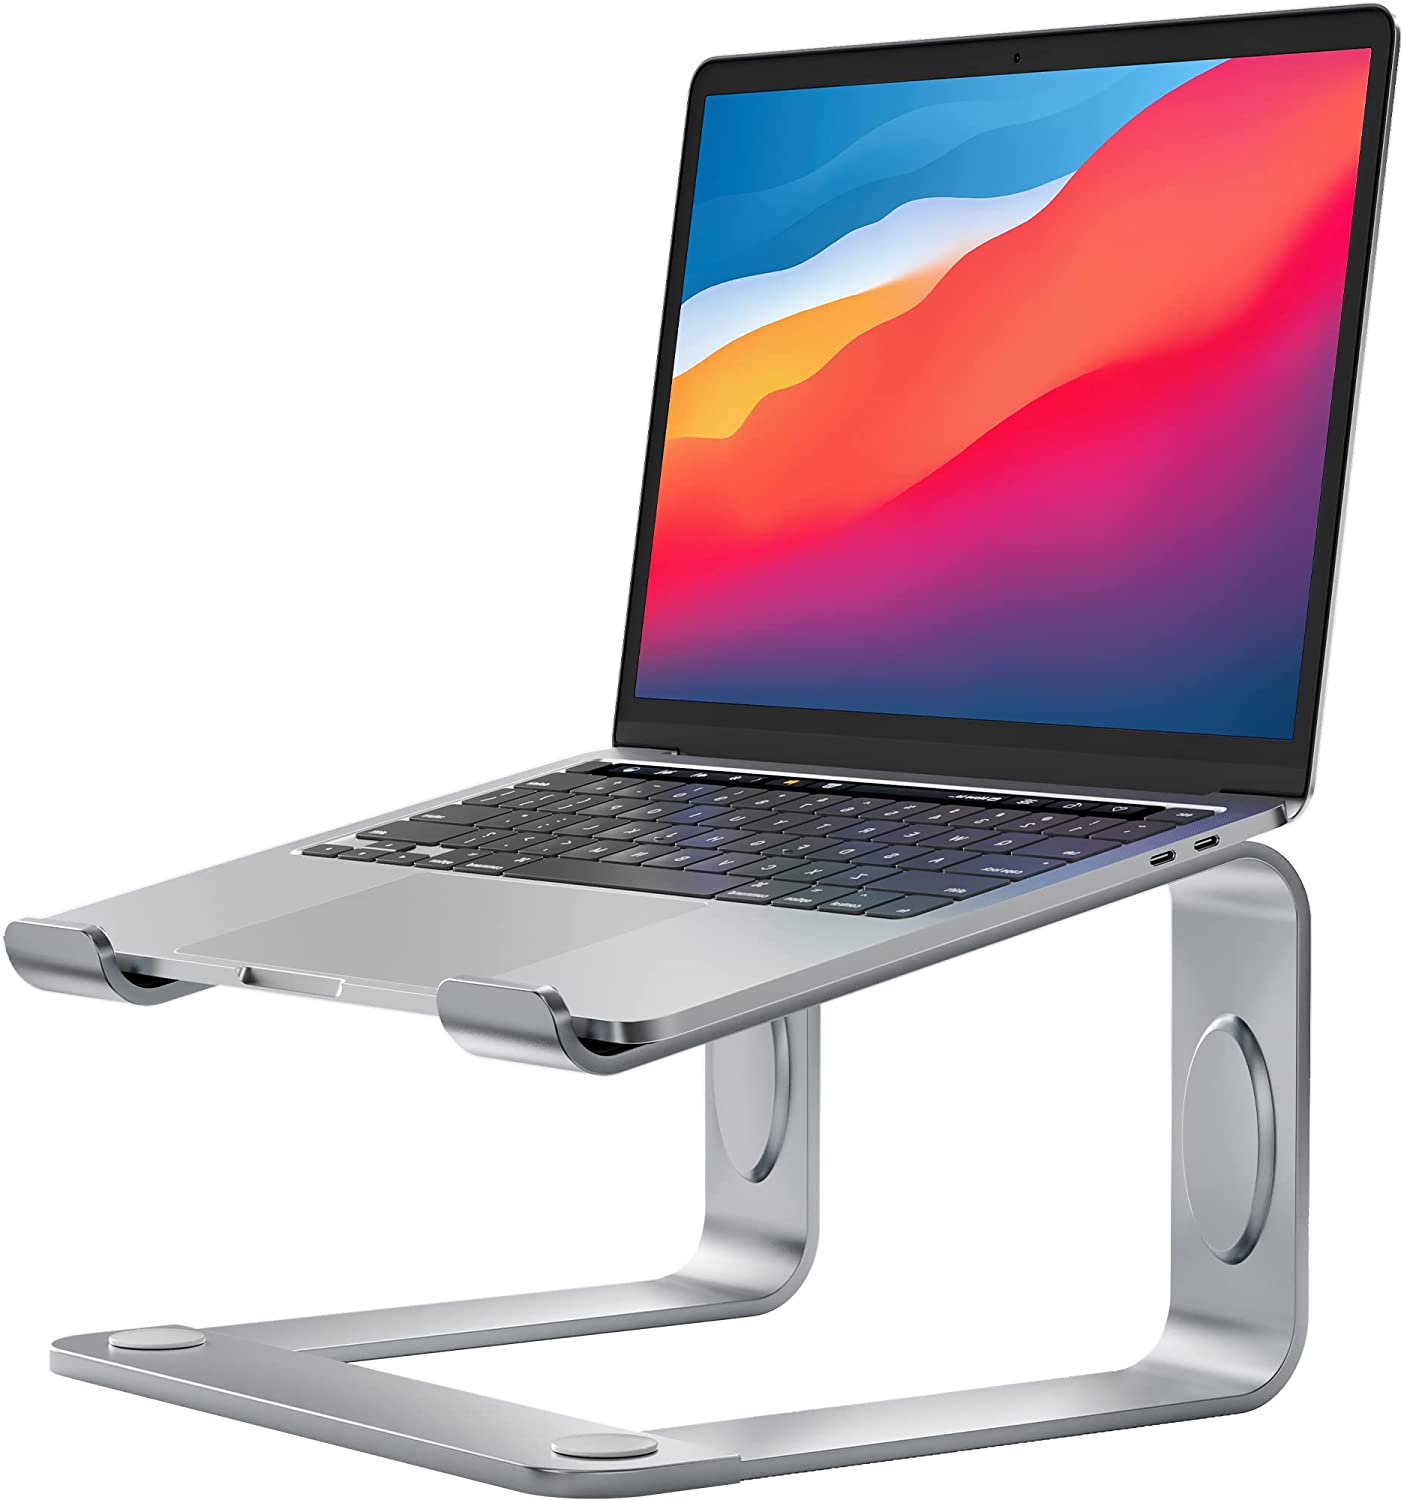 Loryergo Ergonomic Laptop Riser Stand/Mount (Silver) $9.60 + Free Shipping w/ Prime or on $25+